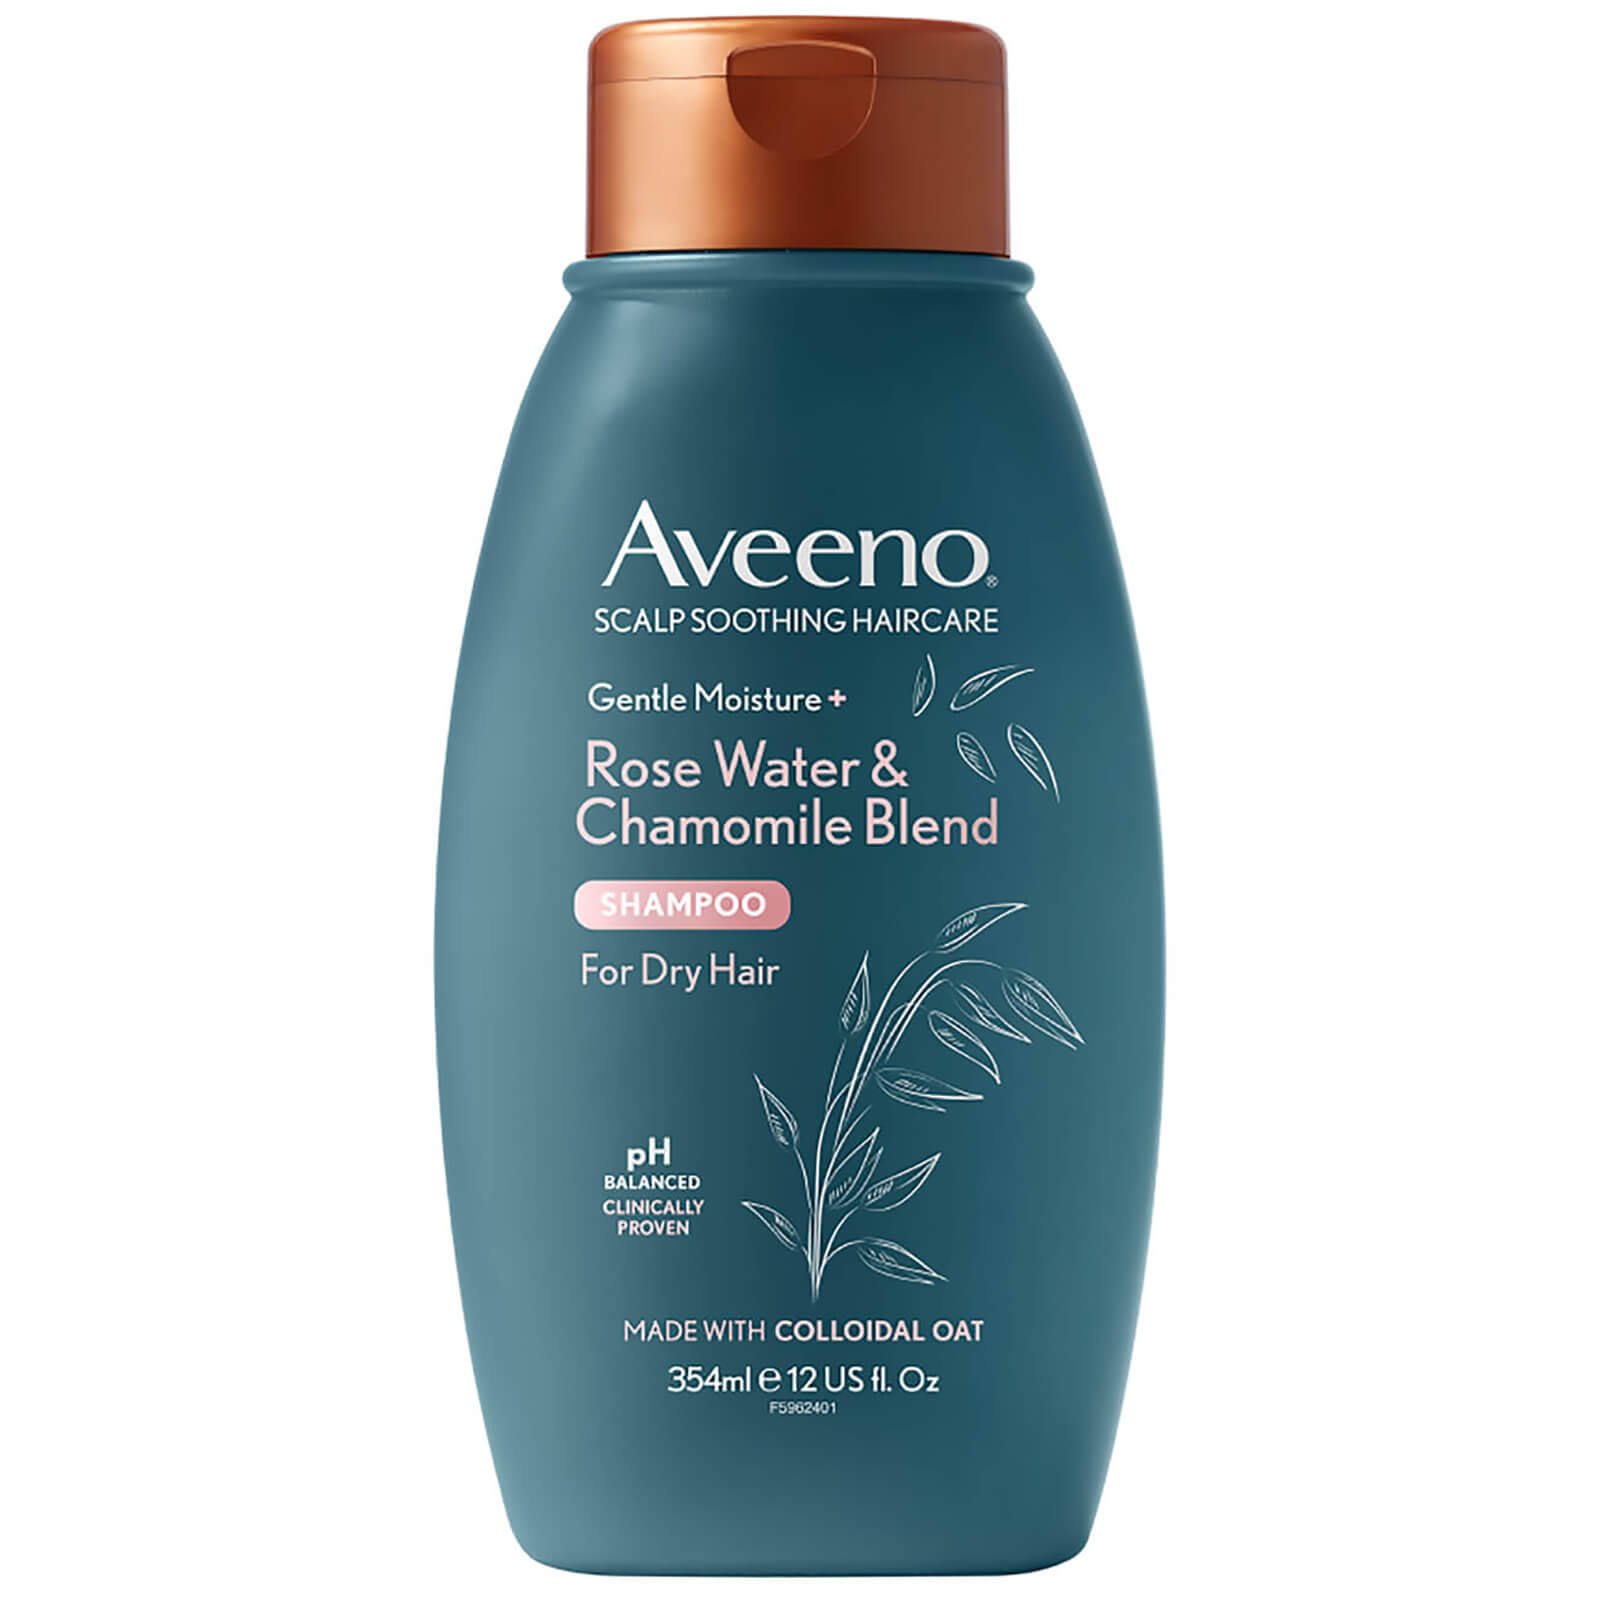 Aveeno Rose Water & Chamomile Blend Shampoo 354ml